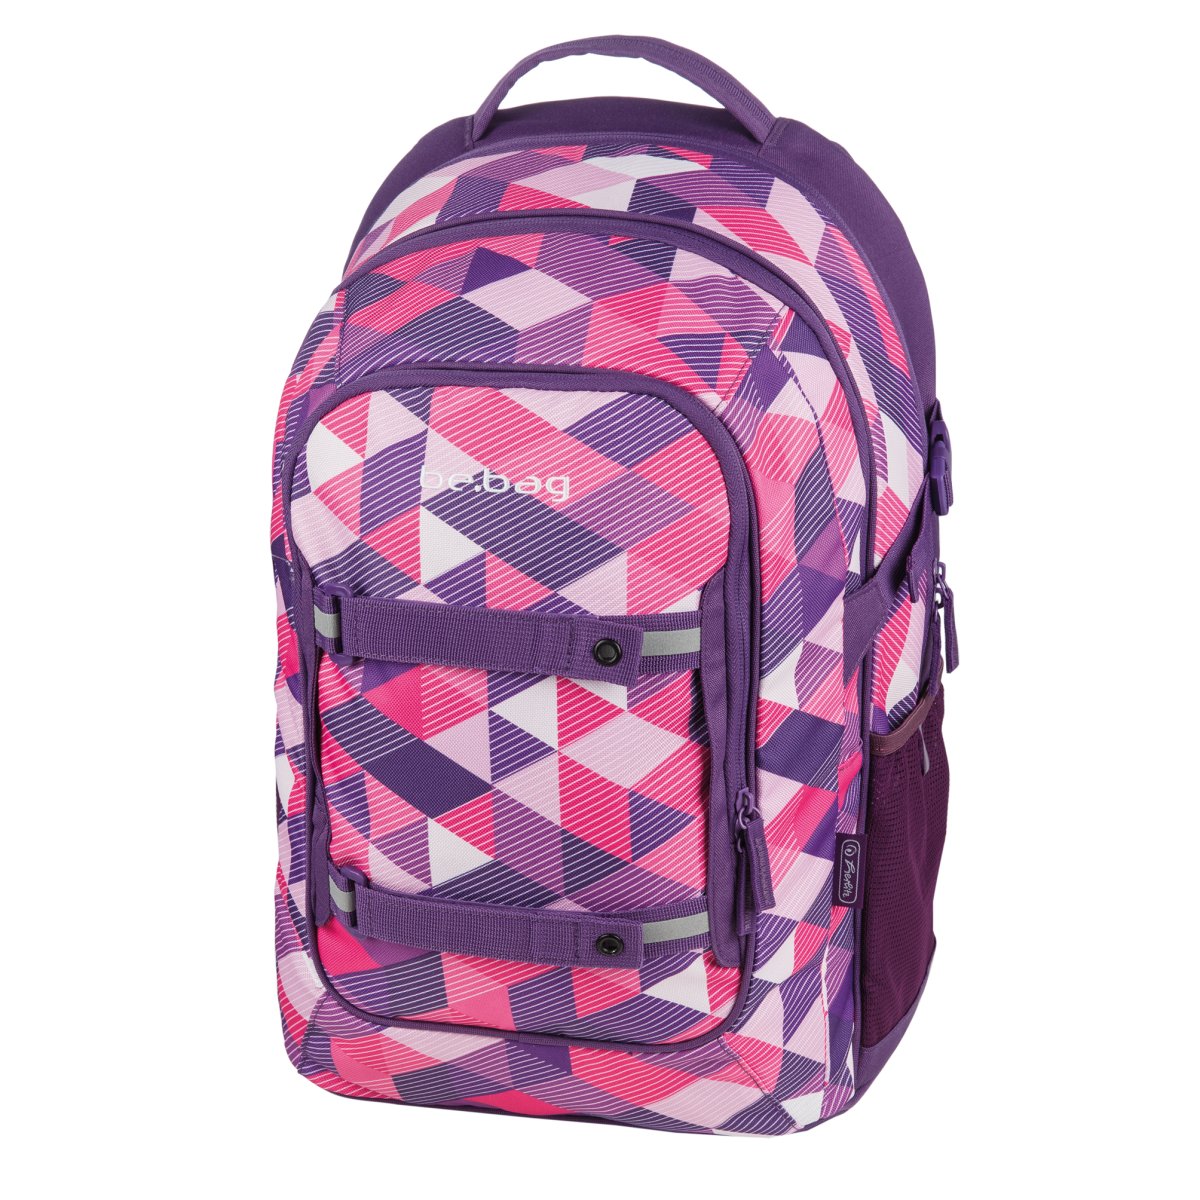 beat Checked be.bag - Herlitz Purple backpack school